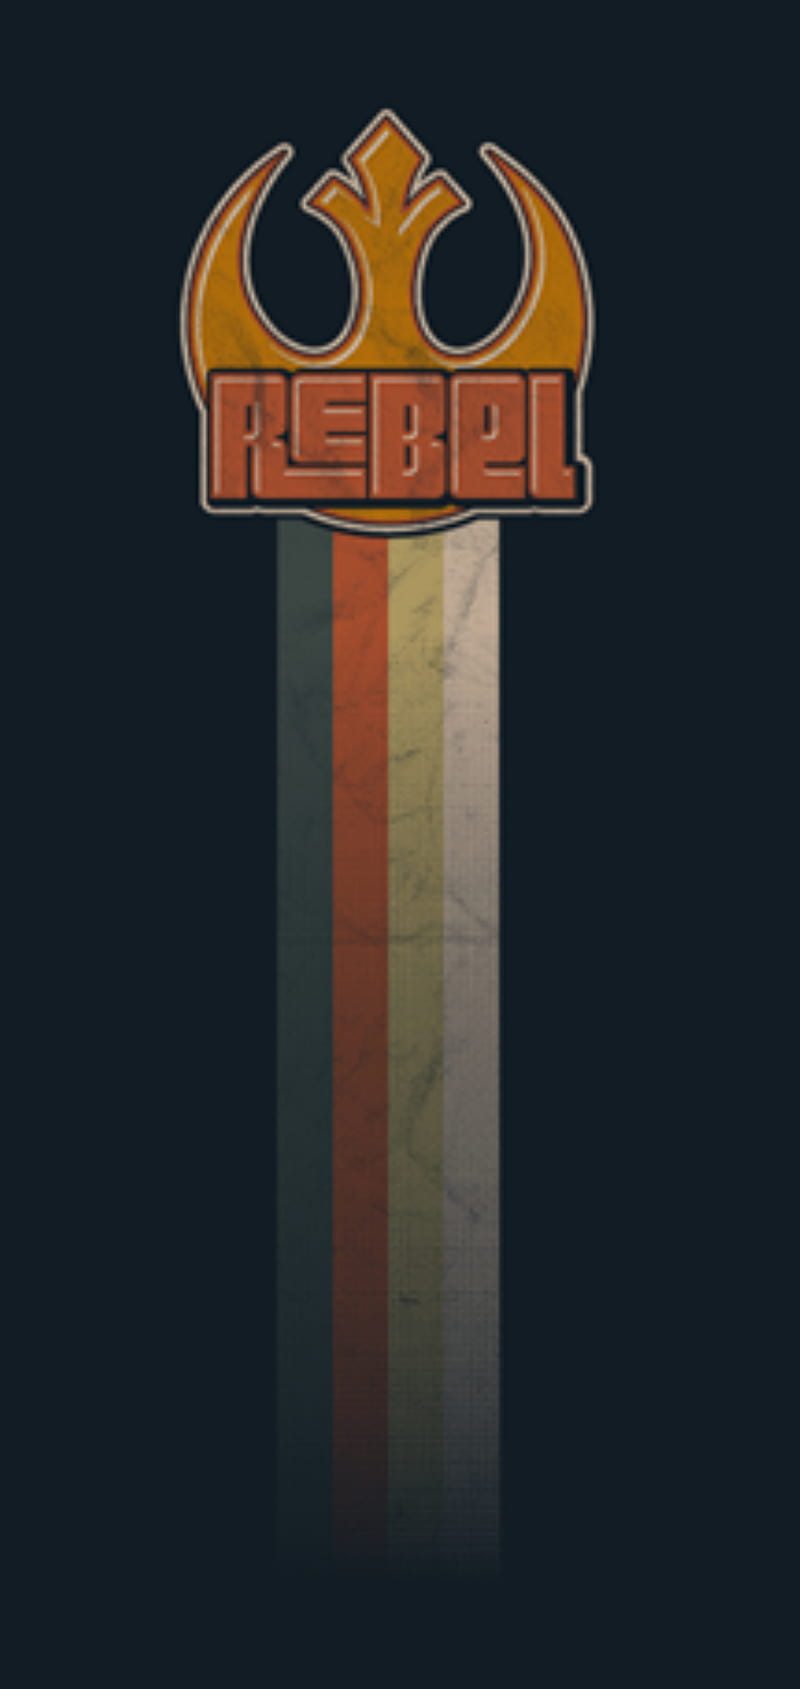 Rebel logo HD wallpapers free download | Wallpaperbetter